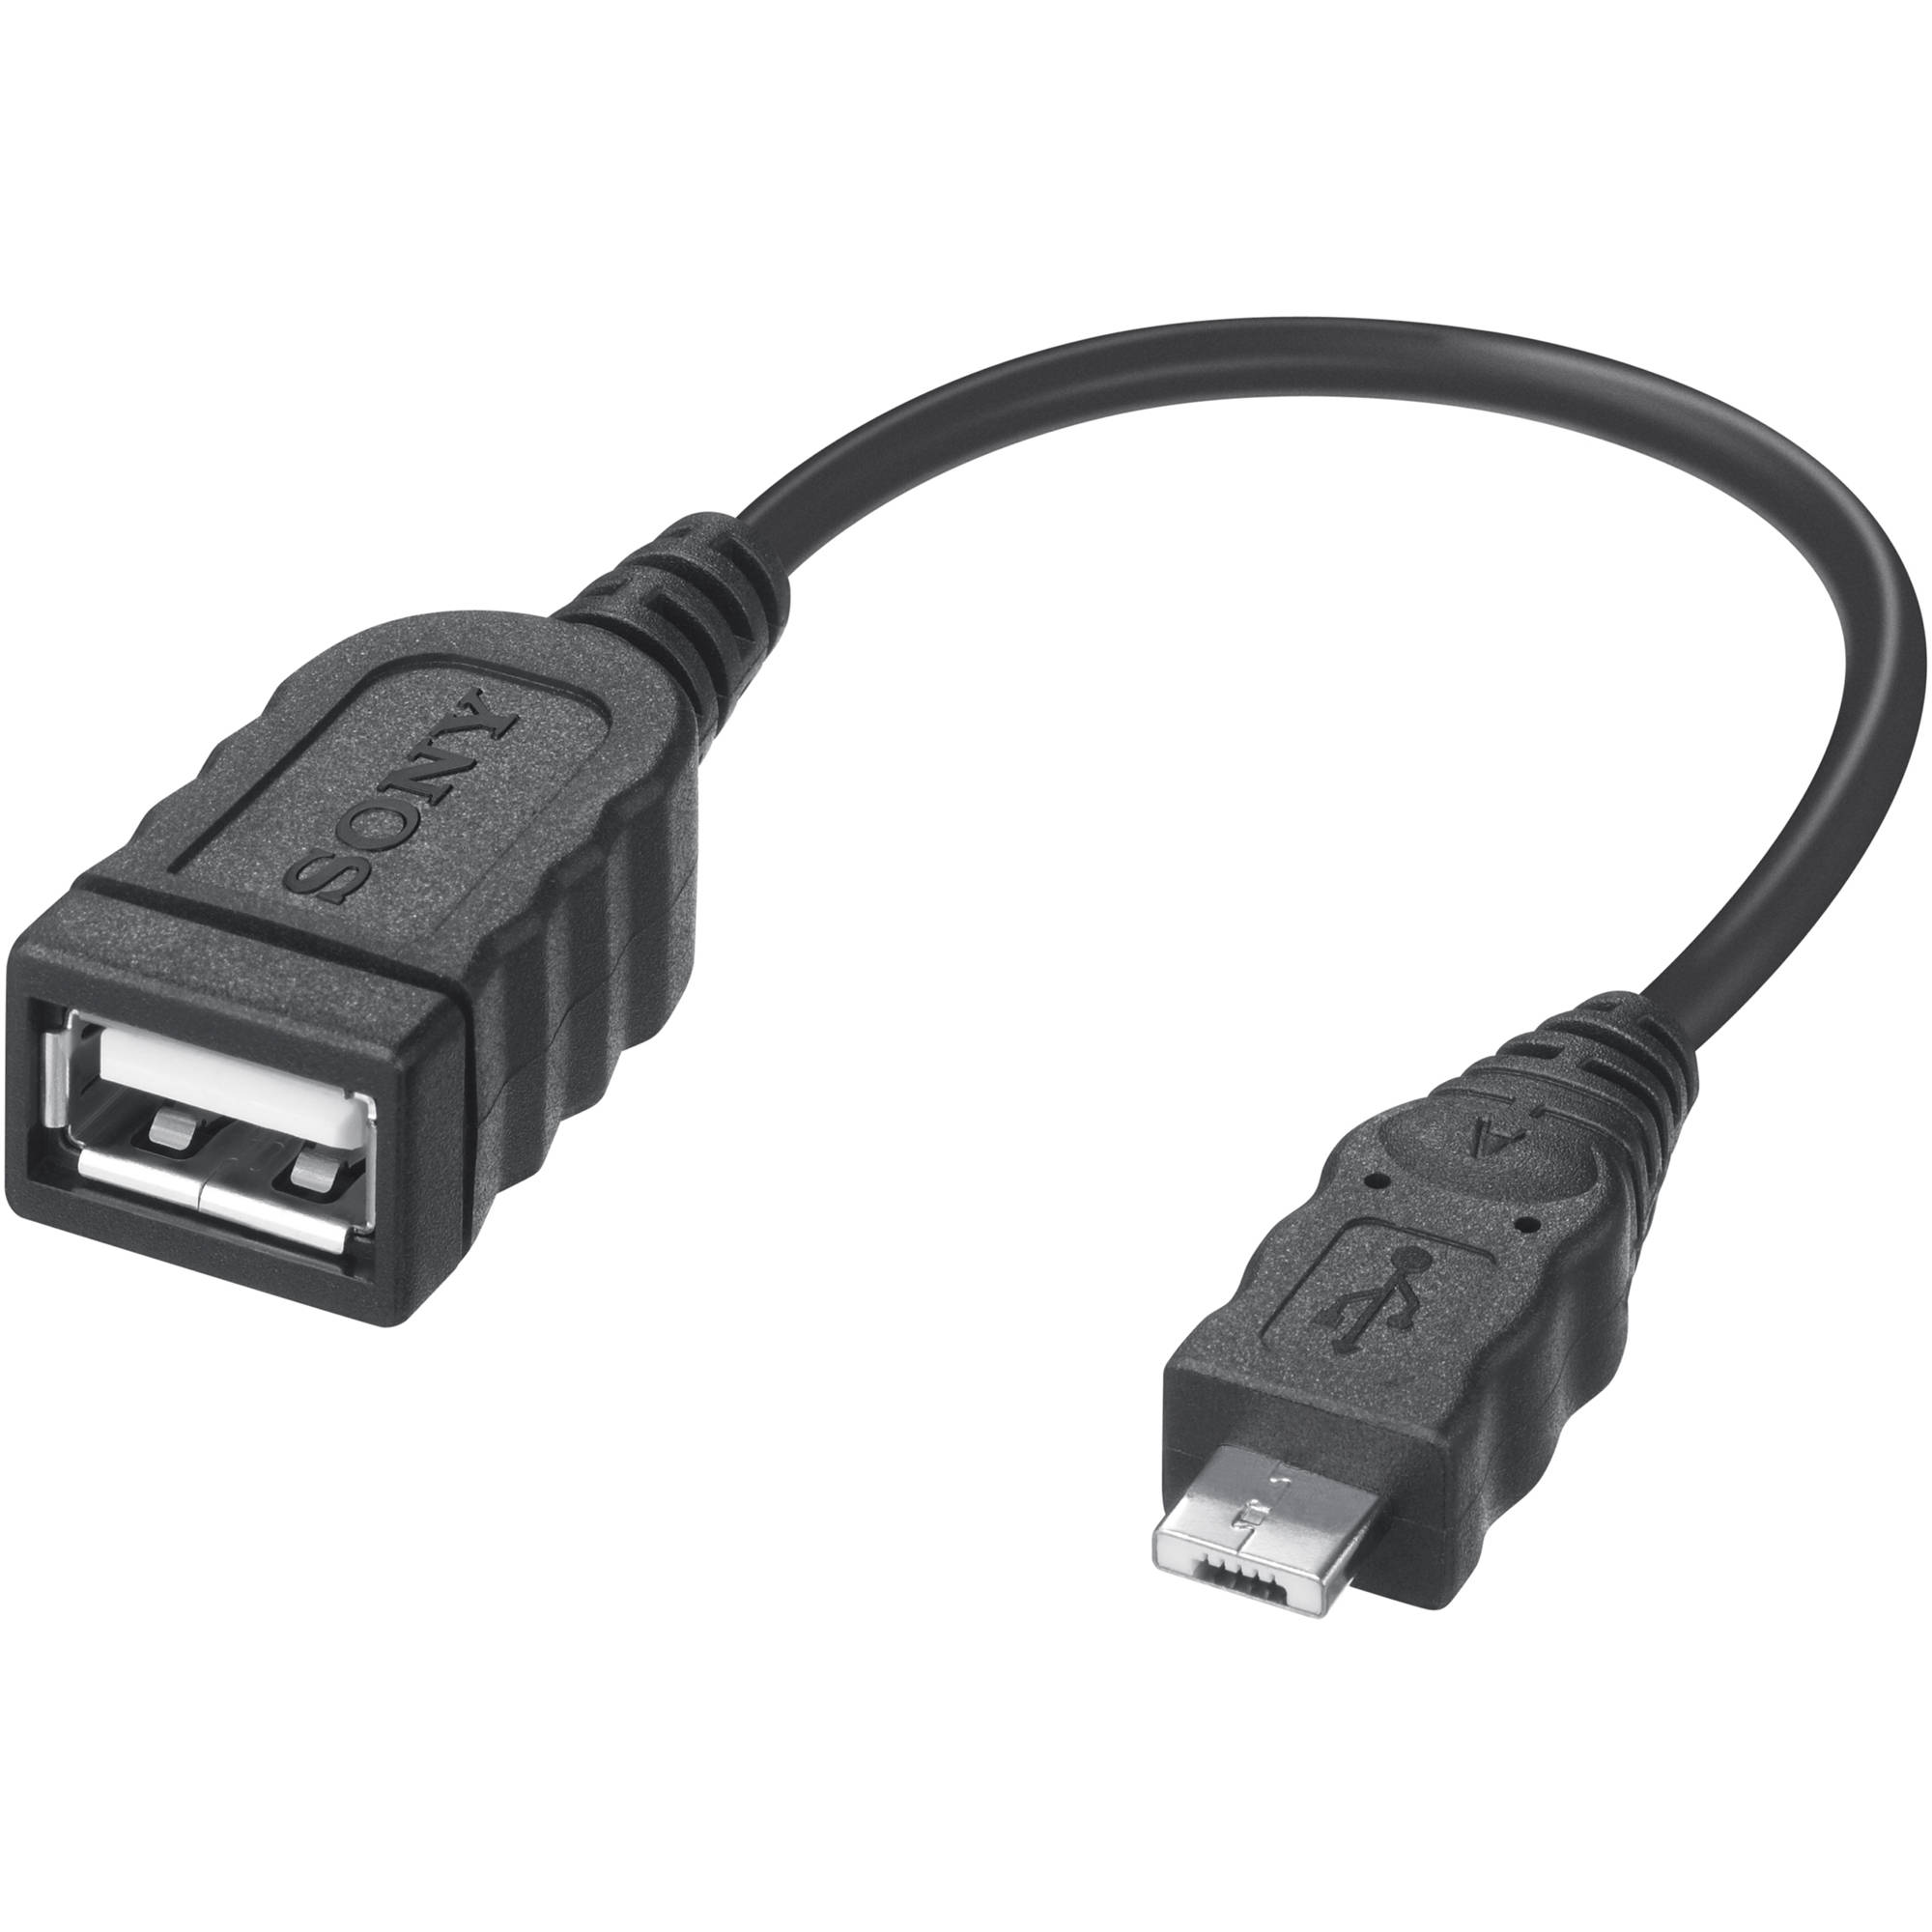 Sony VMC-UAM2 USB Adapter Cable VMCUAM2 B&H Photo Video